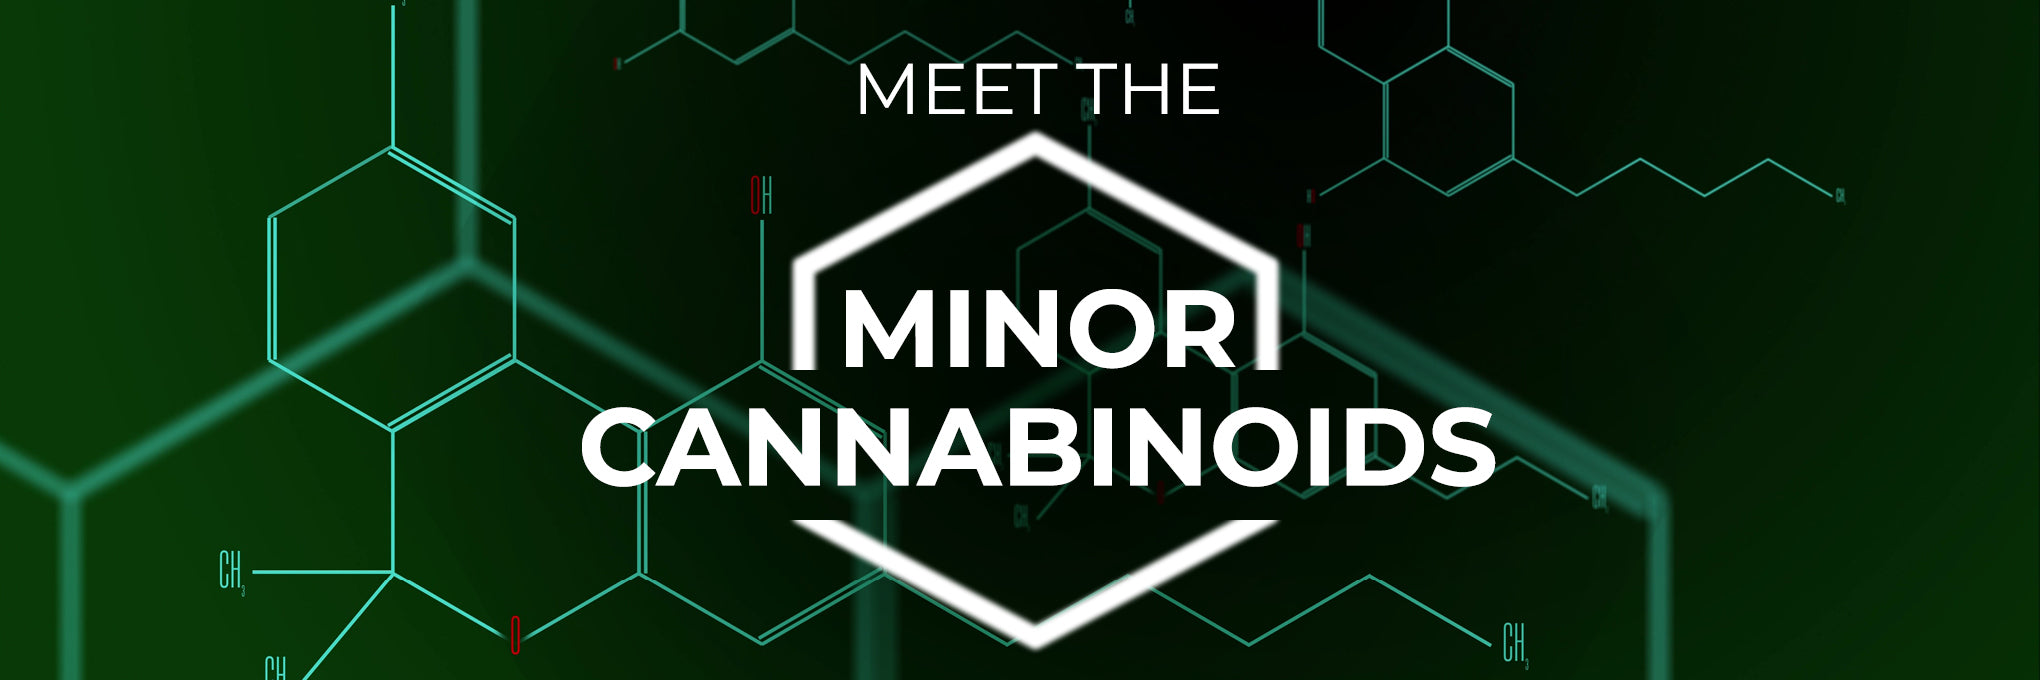 meet-the-minor-cannabinoids-blog